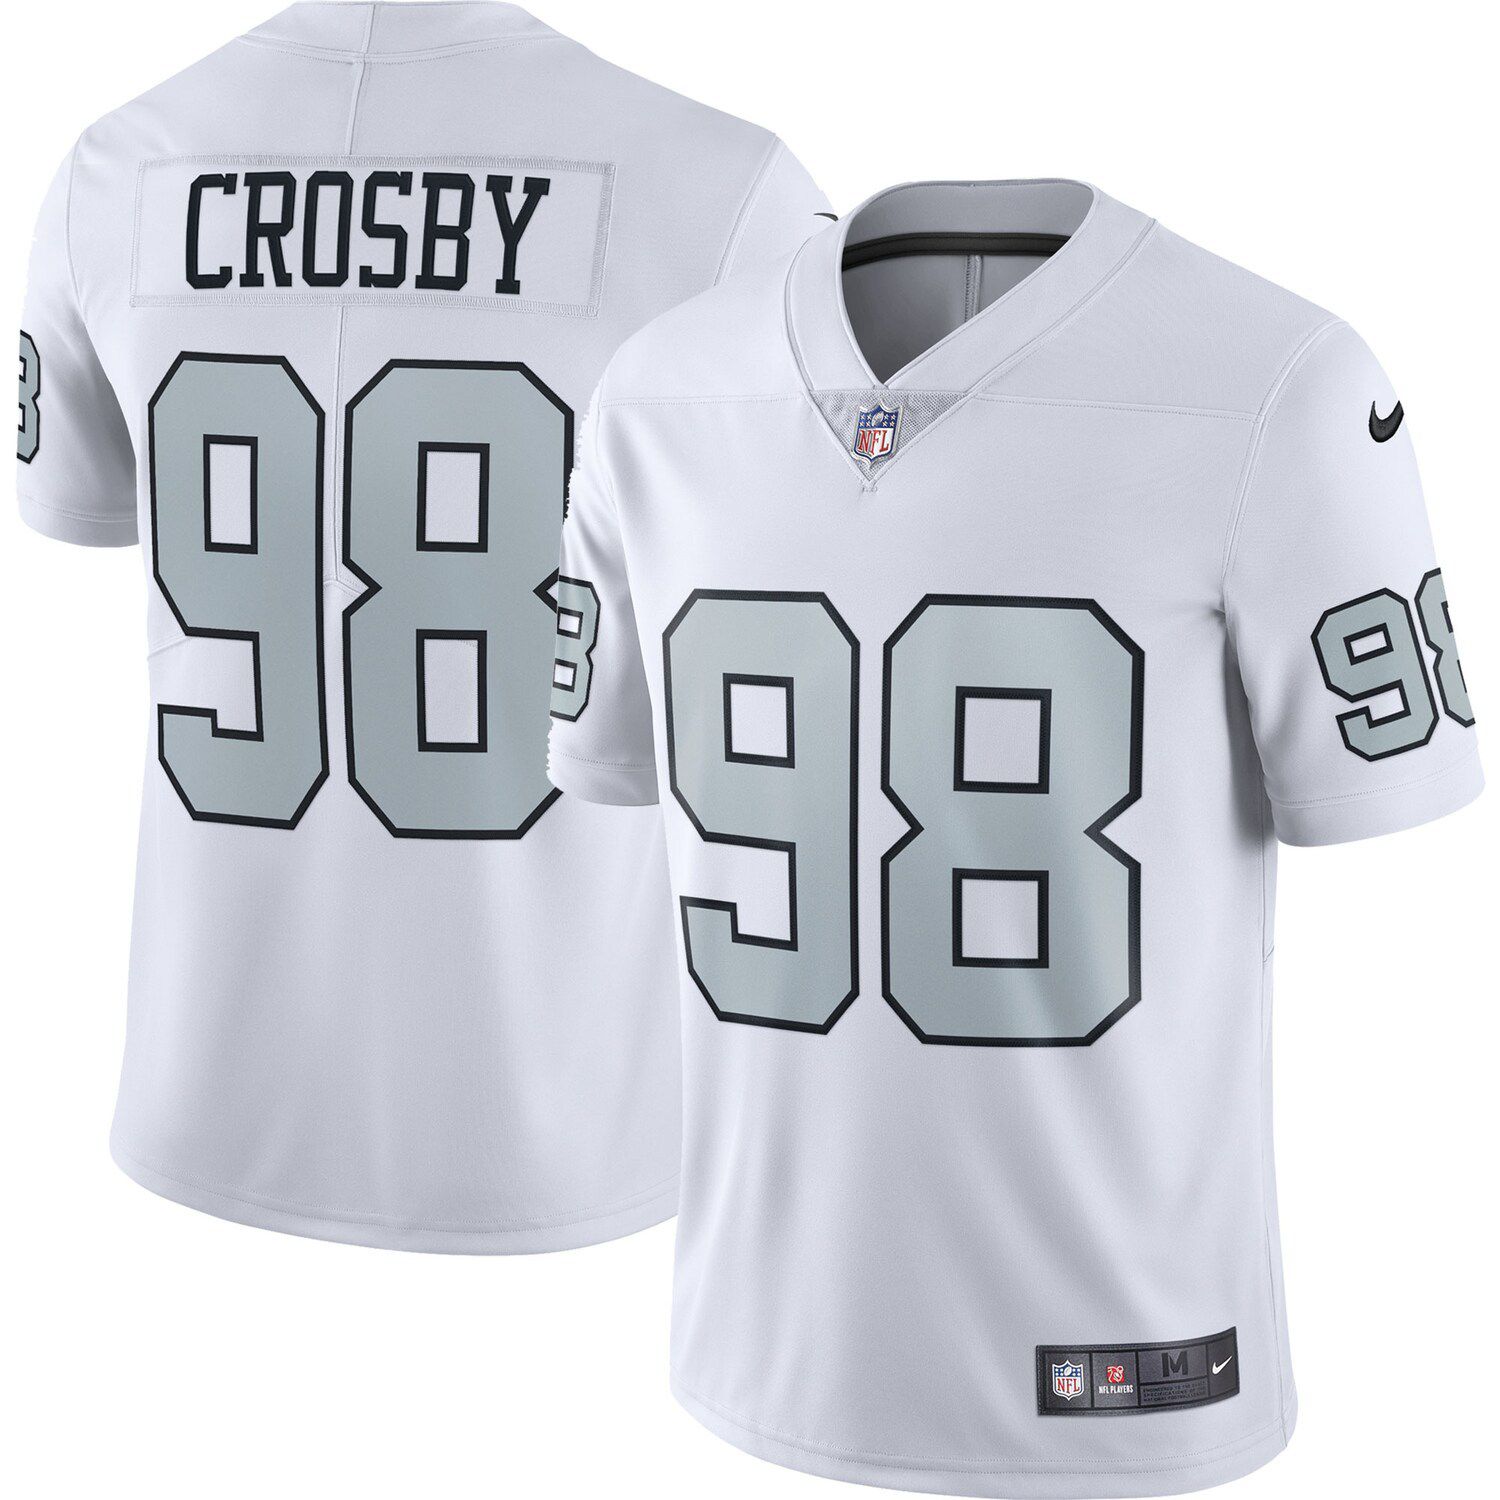 stitched maxx crosby jersey